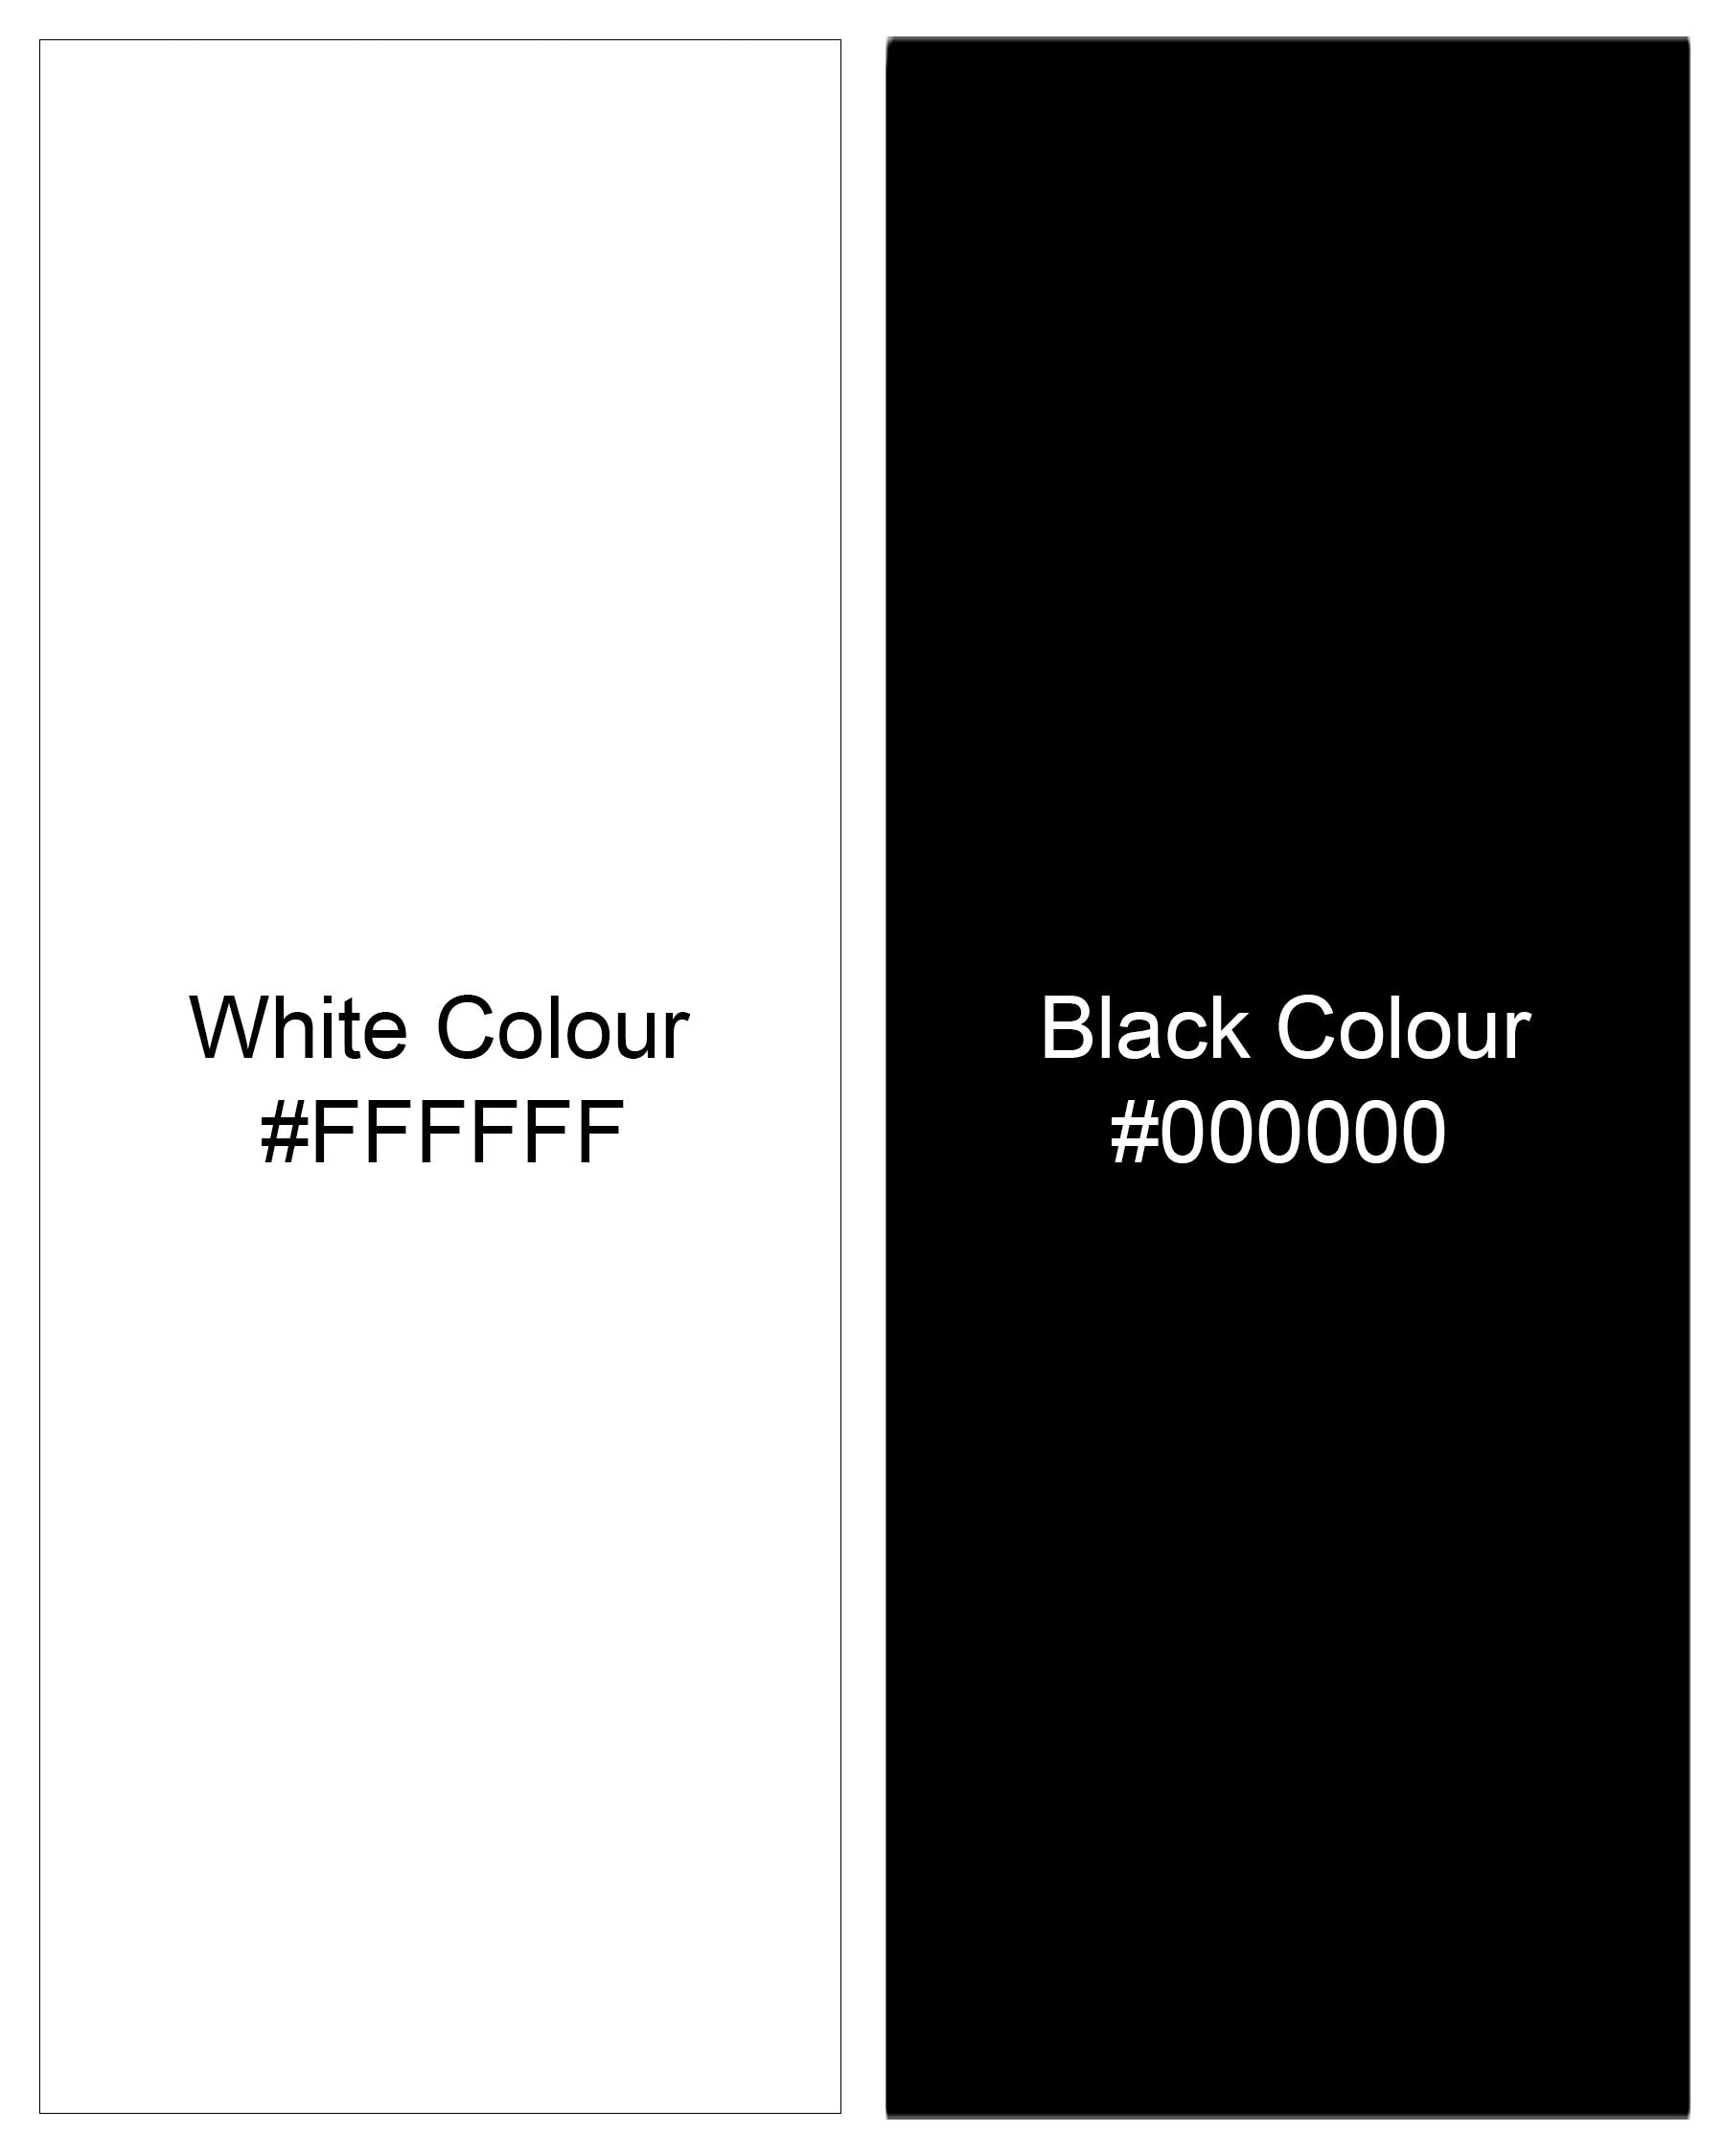 Jade Black and White Mini Checkered Pattern Premium Cotton Shirt 7880-BLK-38, 7880-BLK-H-38, 7880-BLK-39, 7880-BLK-H-39, 7880-BLK-40, 7880-BLK-H-40, 7880-BLK-42, 7880-BLK-H-42, 7880-BLK-44, 7880-BLK-H-44, 7880-BLK-46, 7880-BLK-H-46, 7880-BLK-48, 7880-BLK-H-48, 7880-BLK-50, 7880-BLK-H-50, 7880-BLK-52, 7880-BLK-H-52